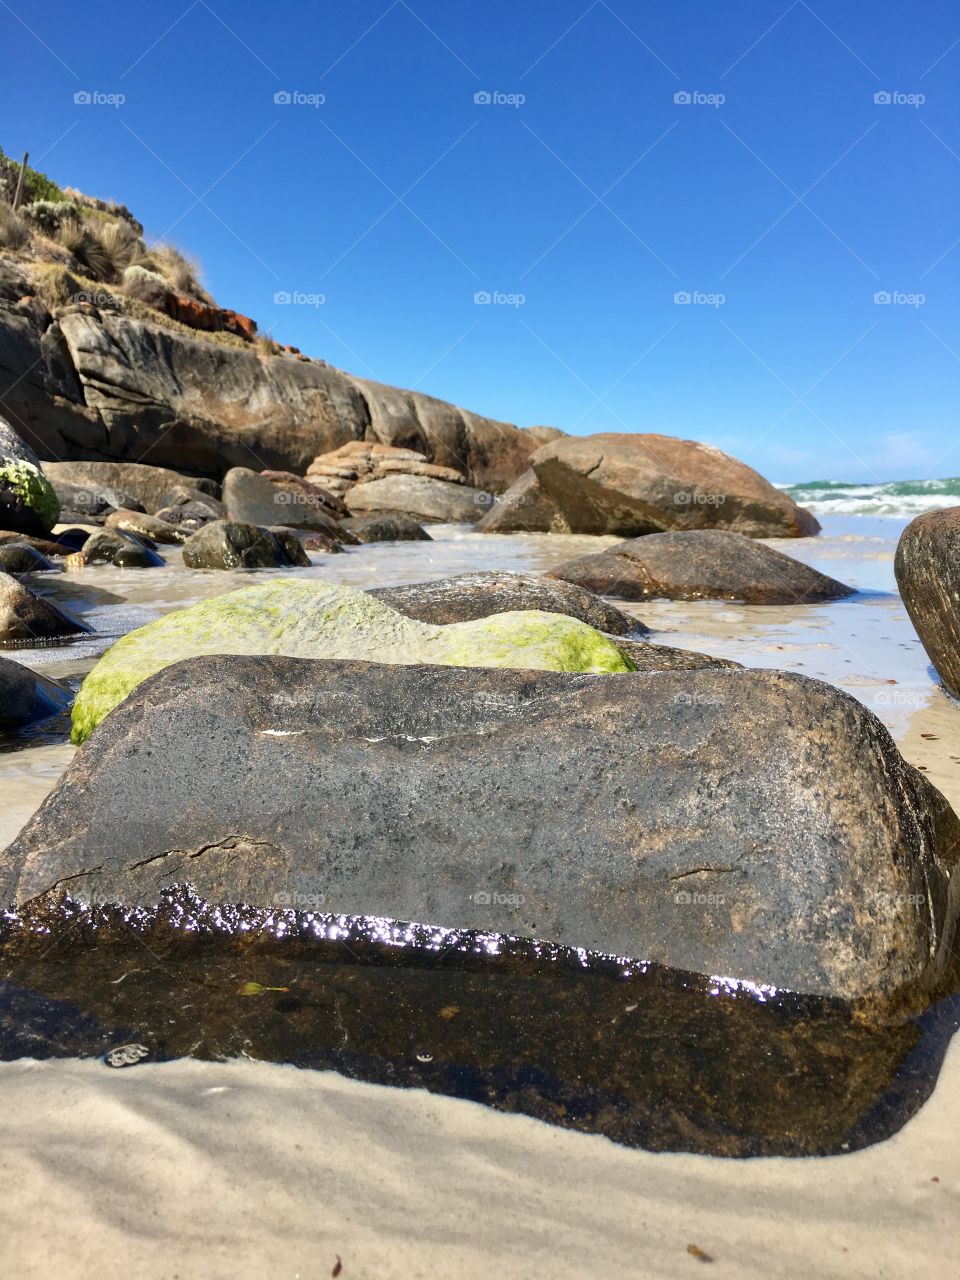 Green algae on boulders in ocean south Australia low tide 